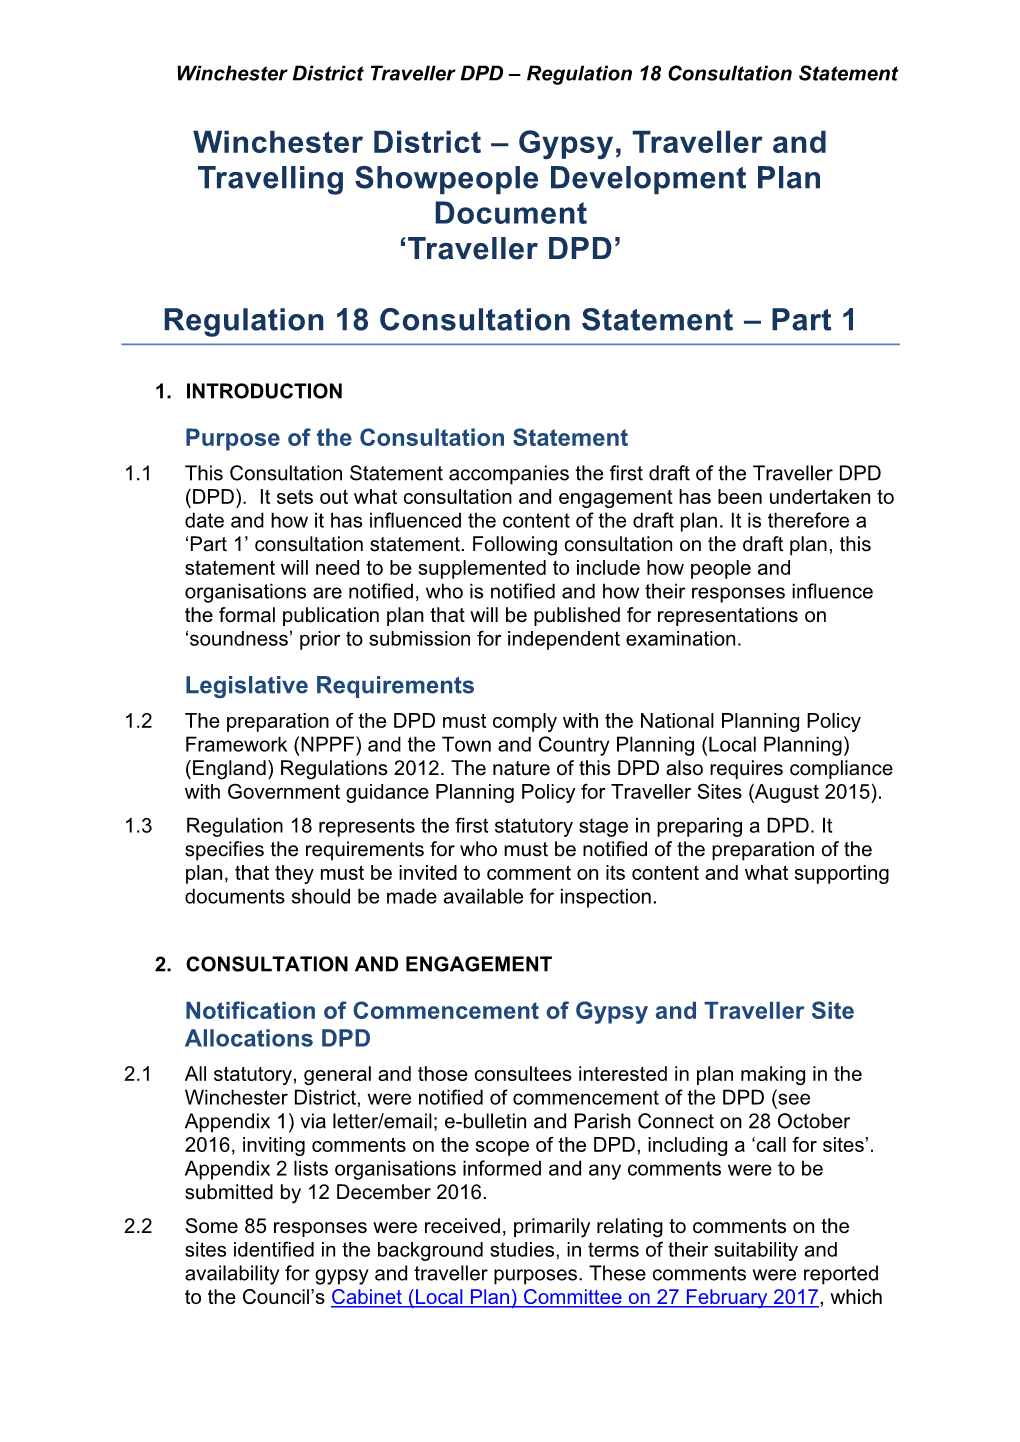 'Traveller DPD' Regulation 18 Consultation Statement – Part 1